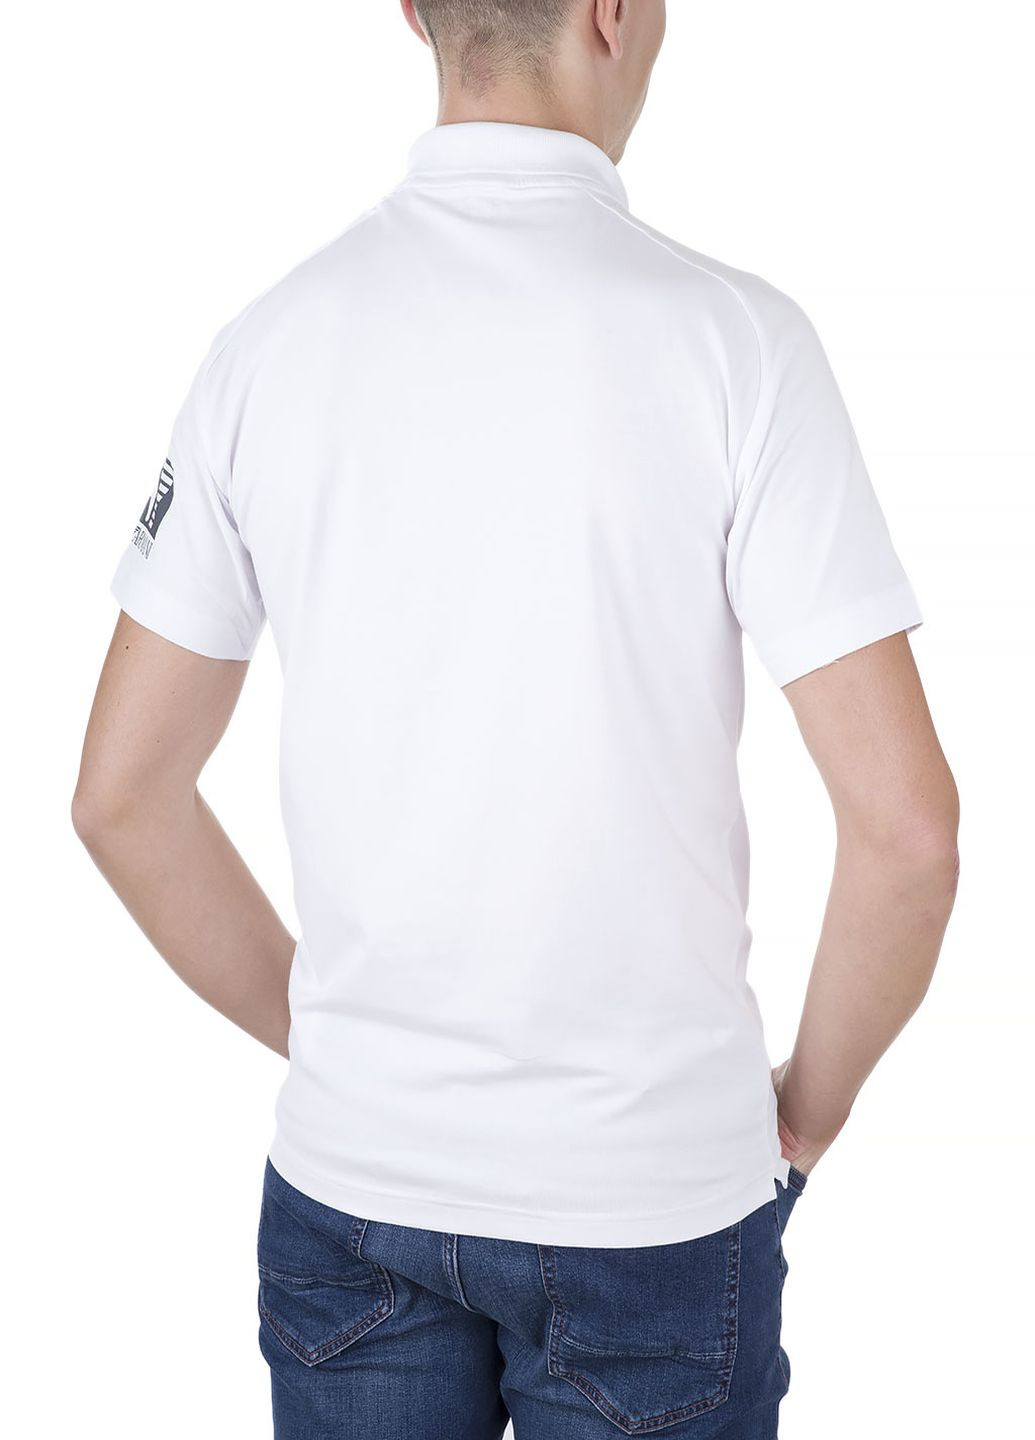 Белая футболка-поло для мужчин ARMANI EA7 с логотипом